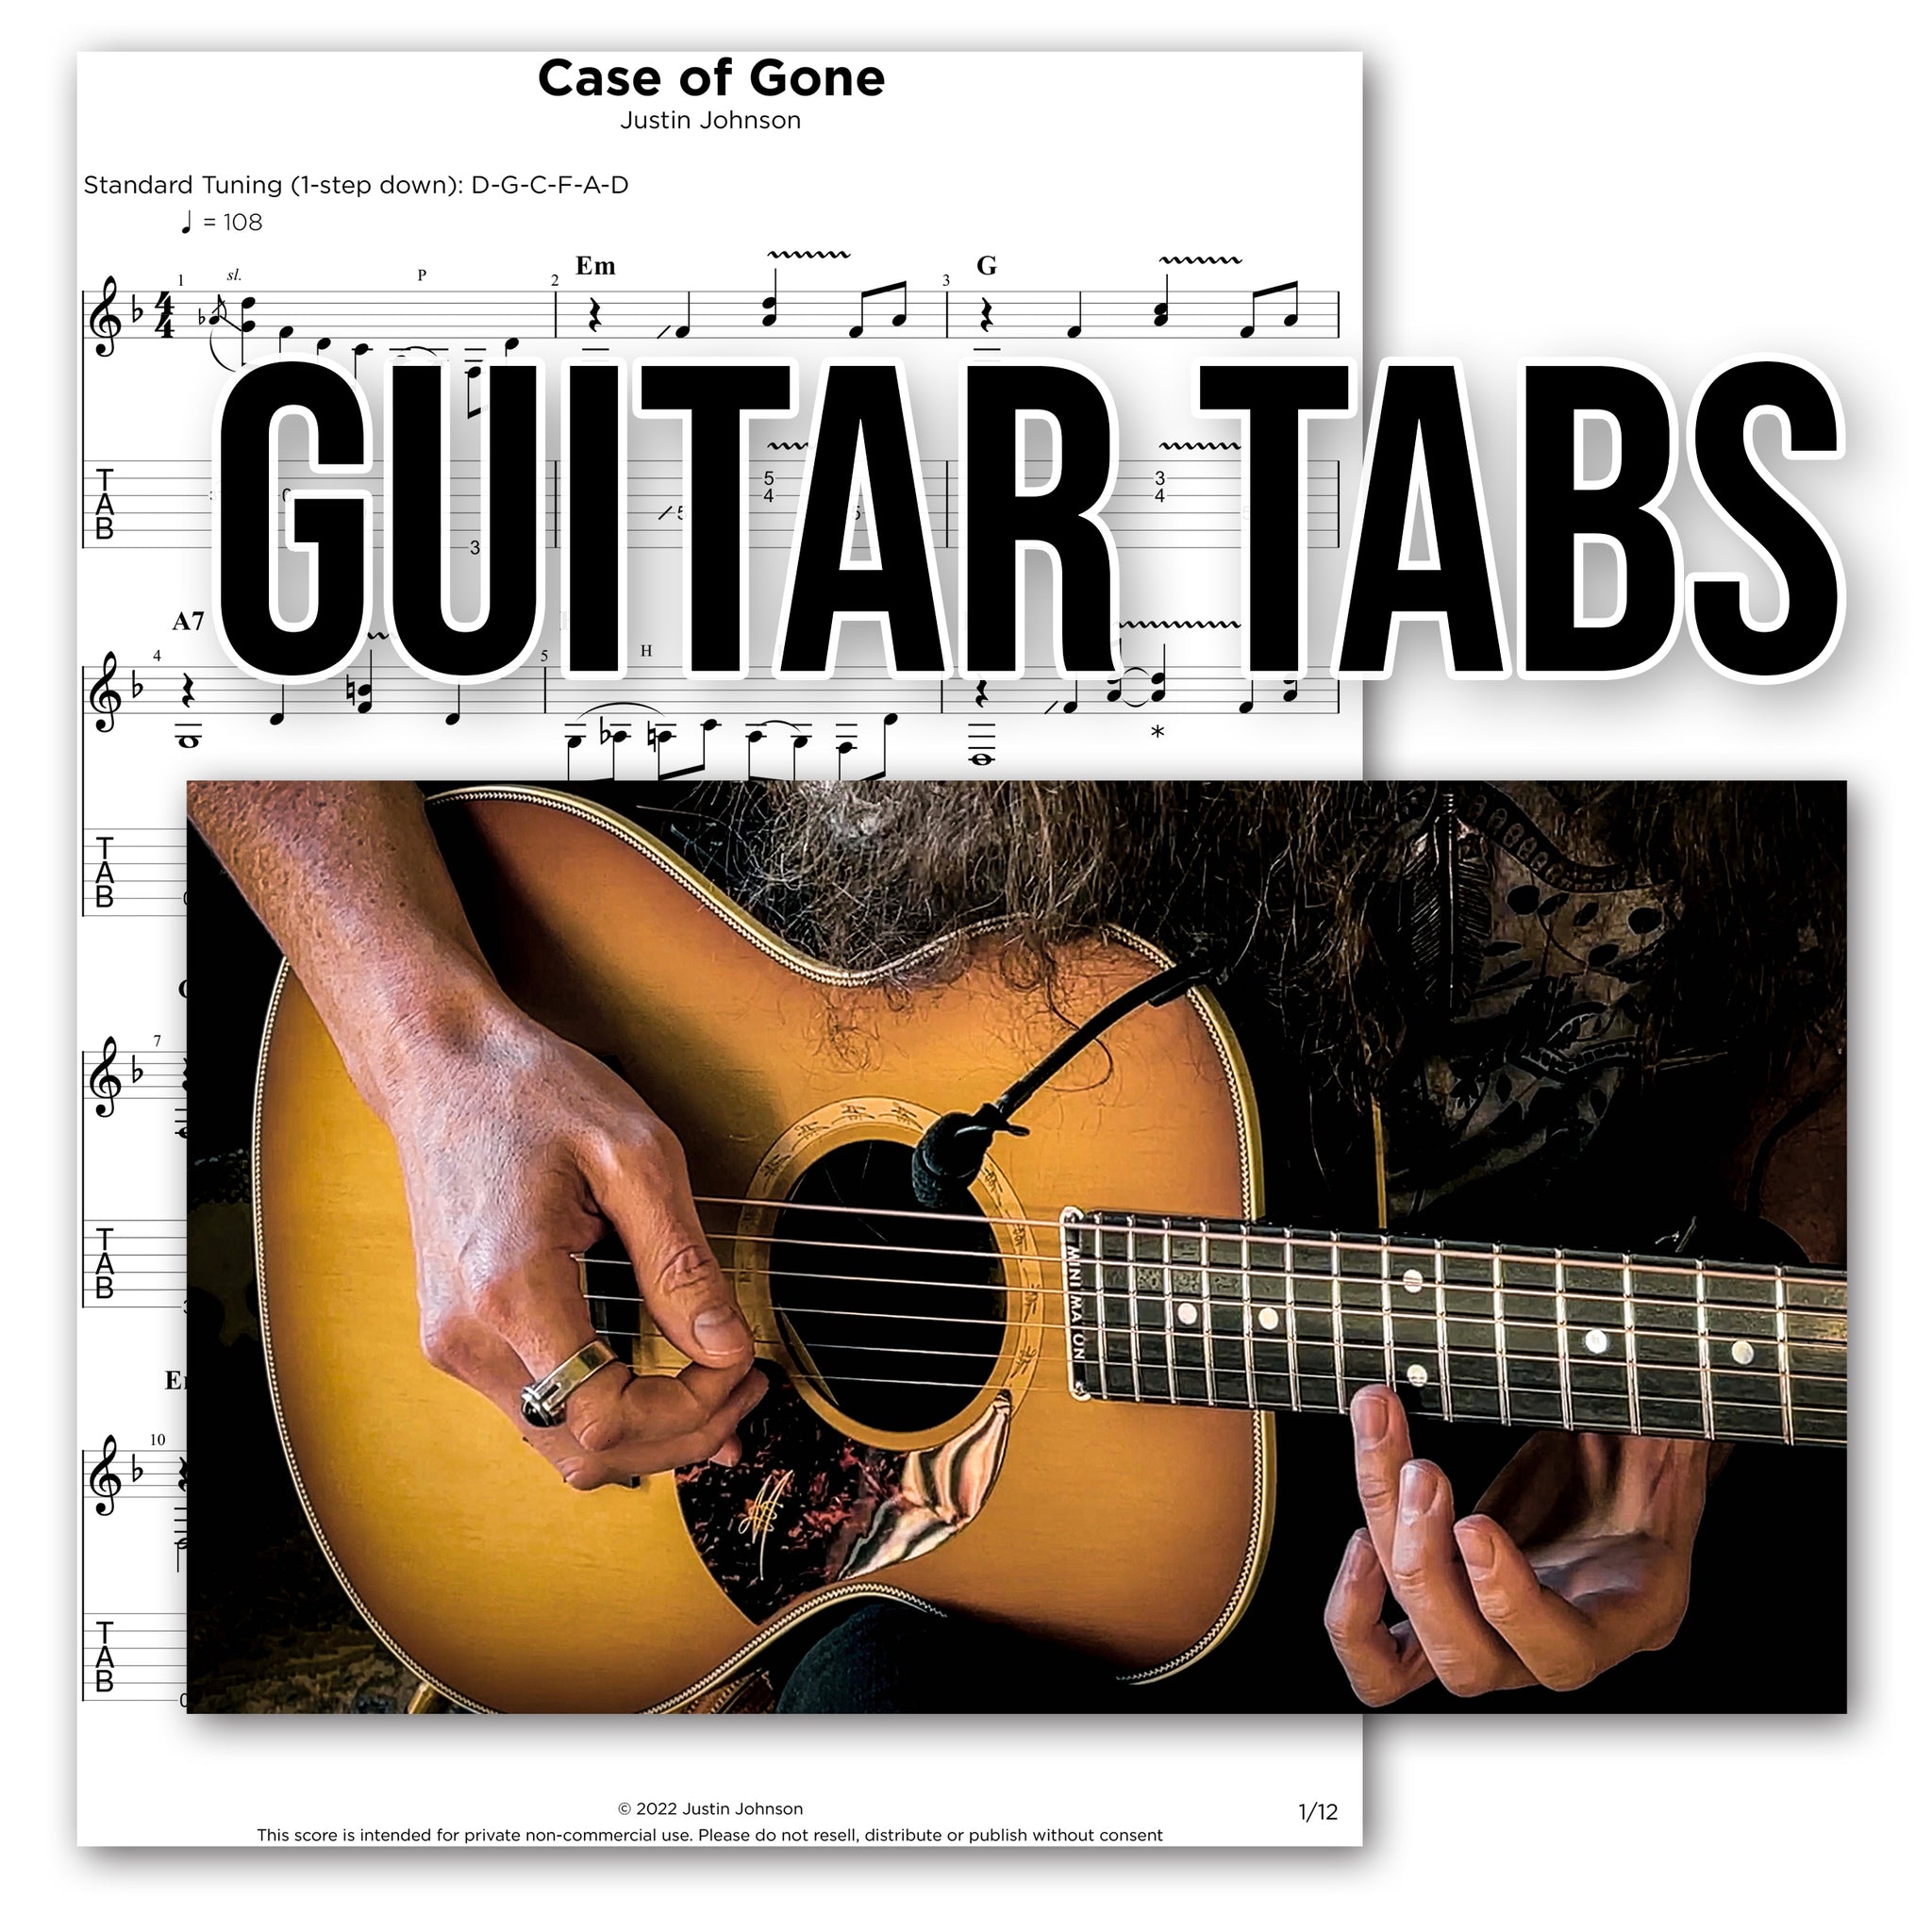 GUITAR TABS - "Case of Gone"